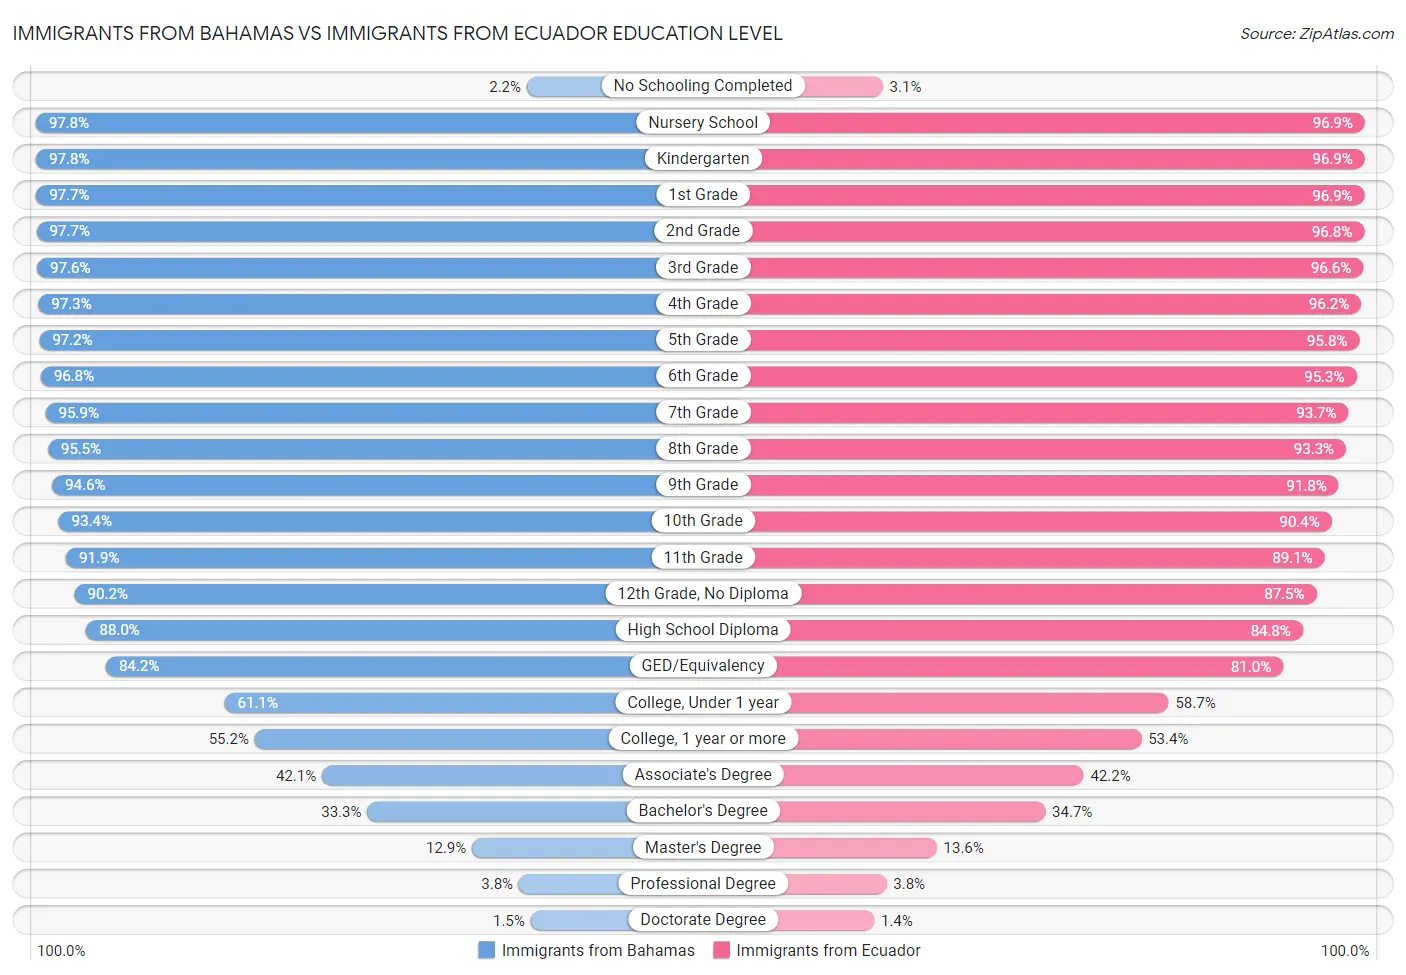 Immigrants from Bahamas vs Immigrants from Ecuador Education Level